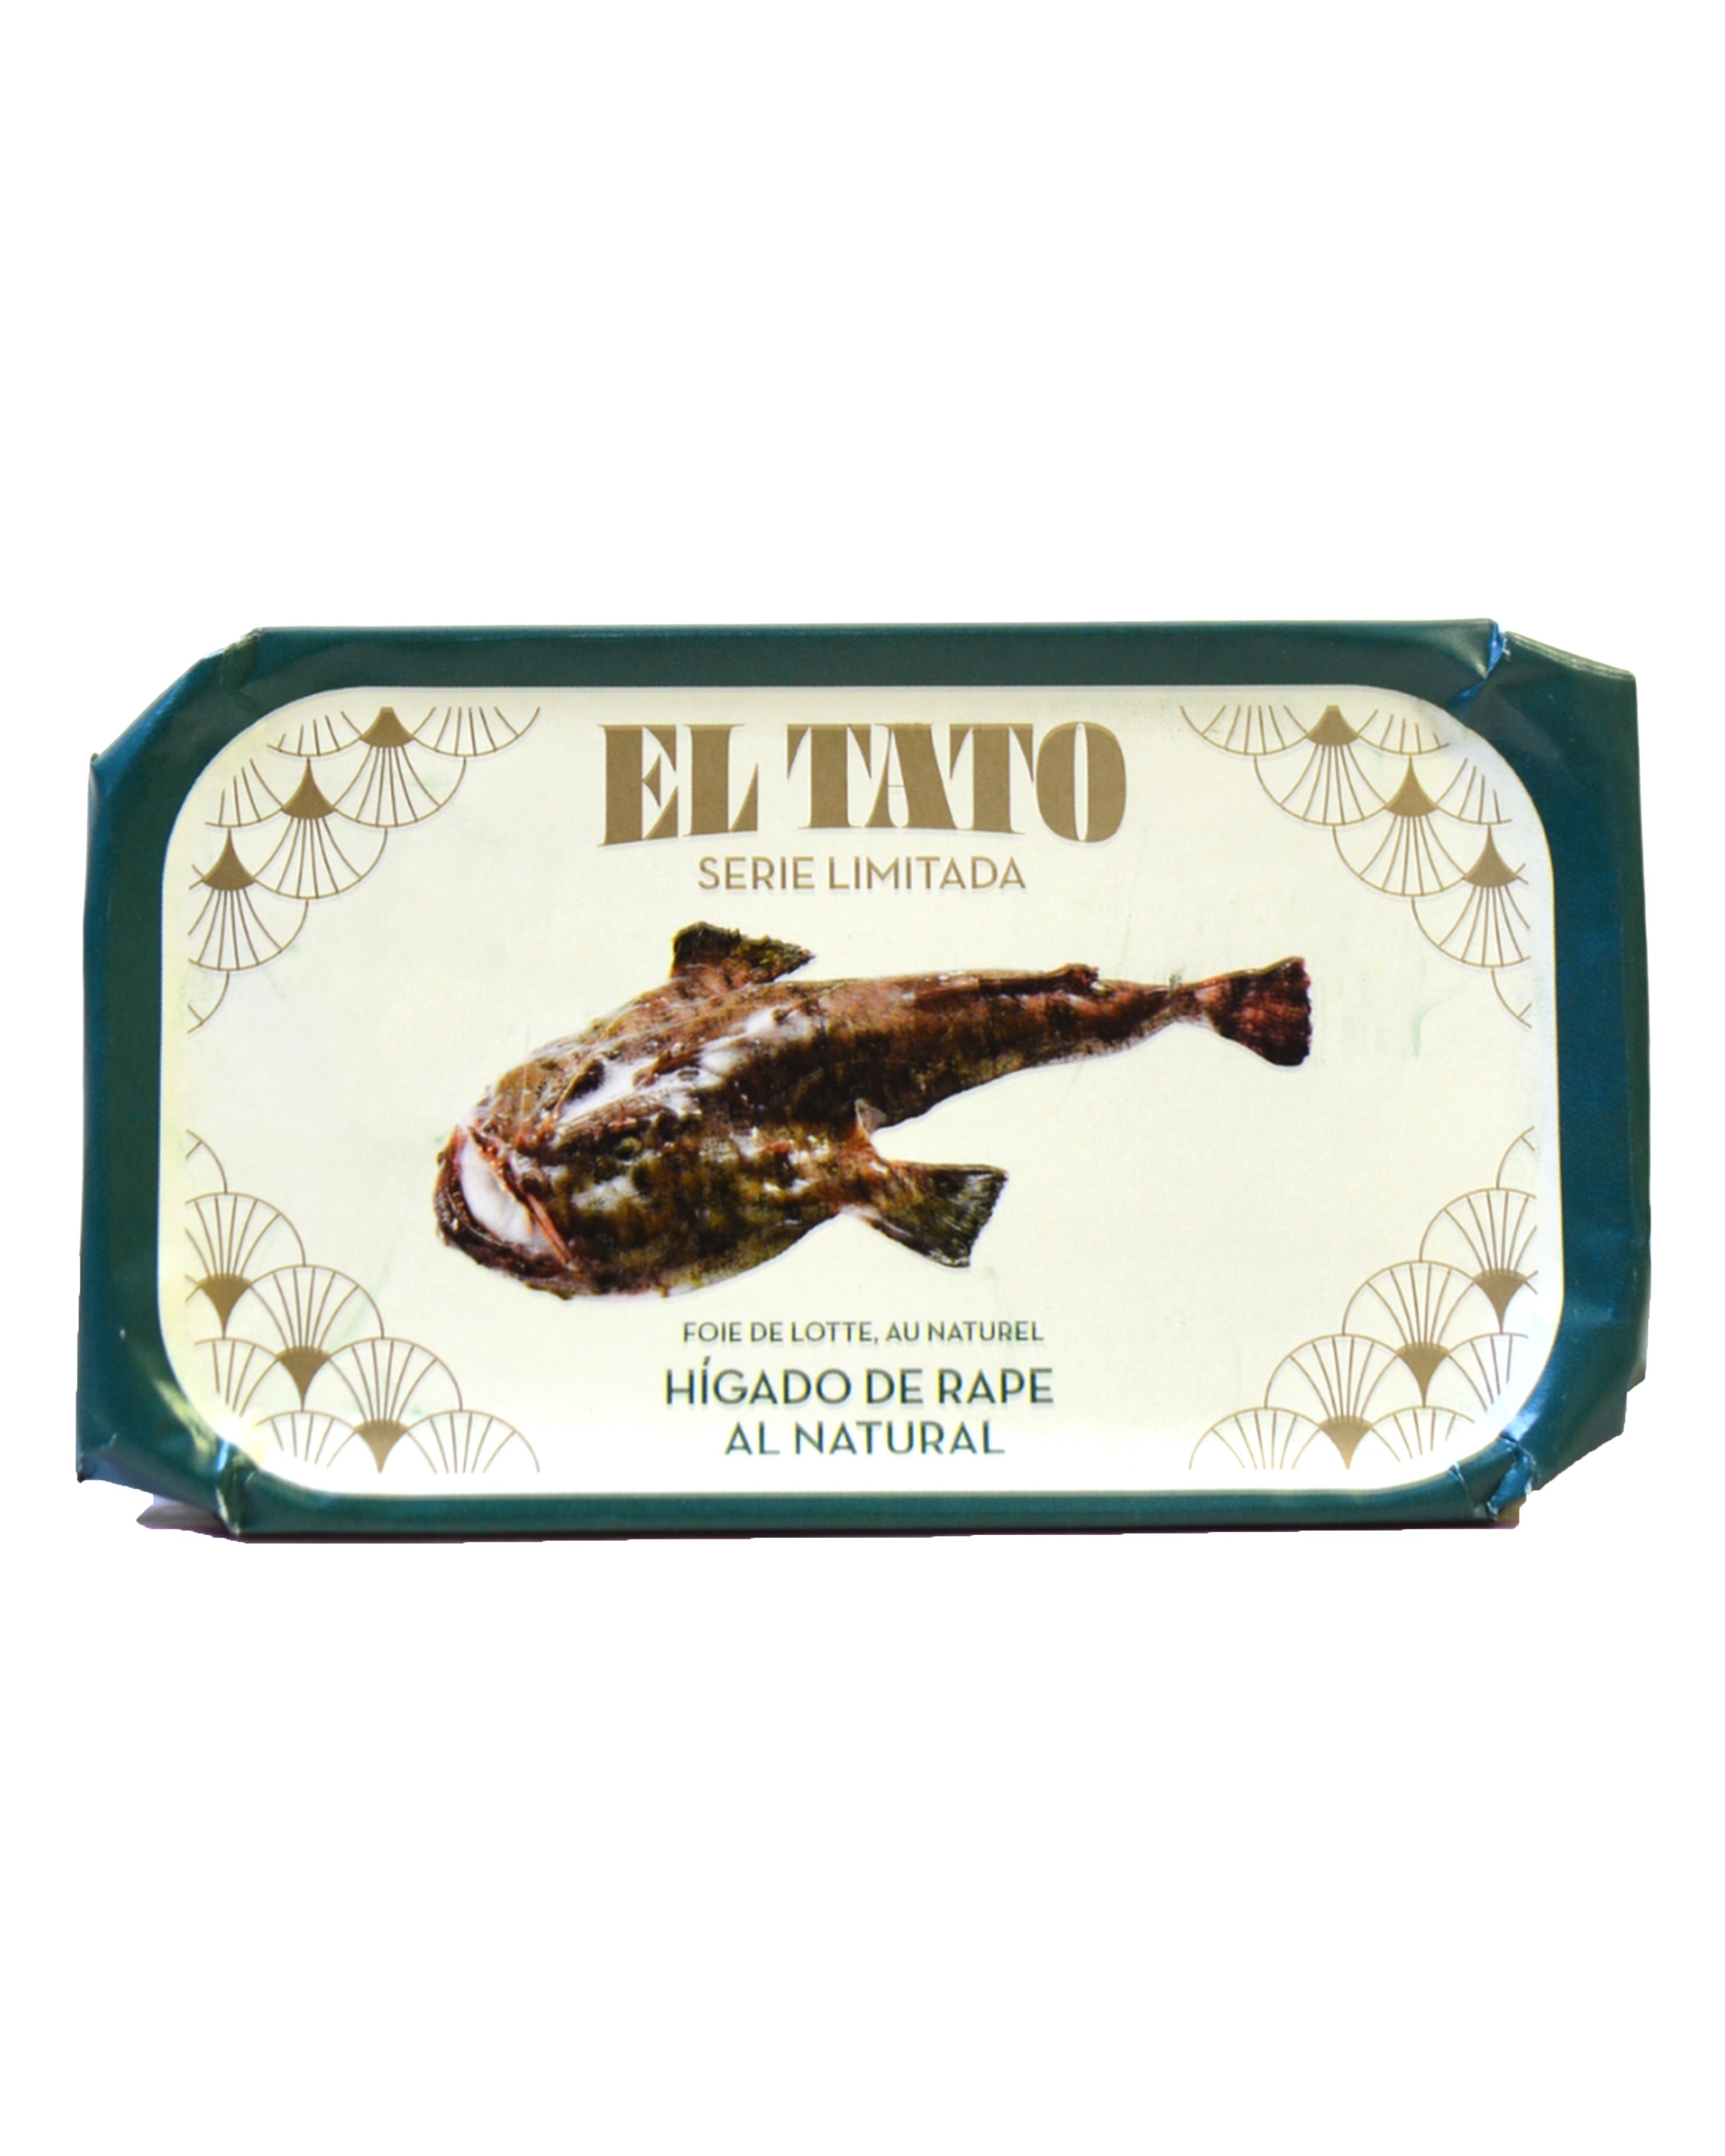 Natural monkfish liver - Calle el Tato